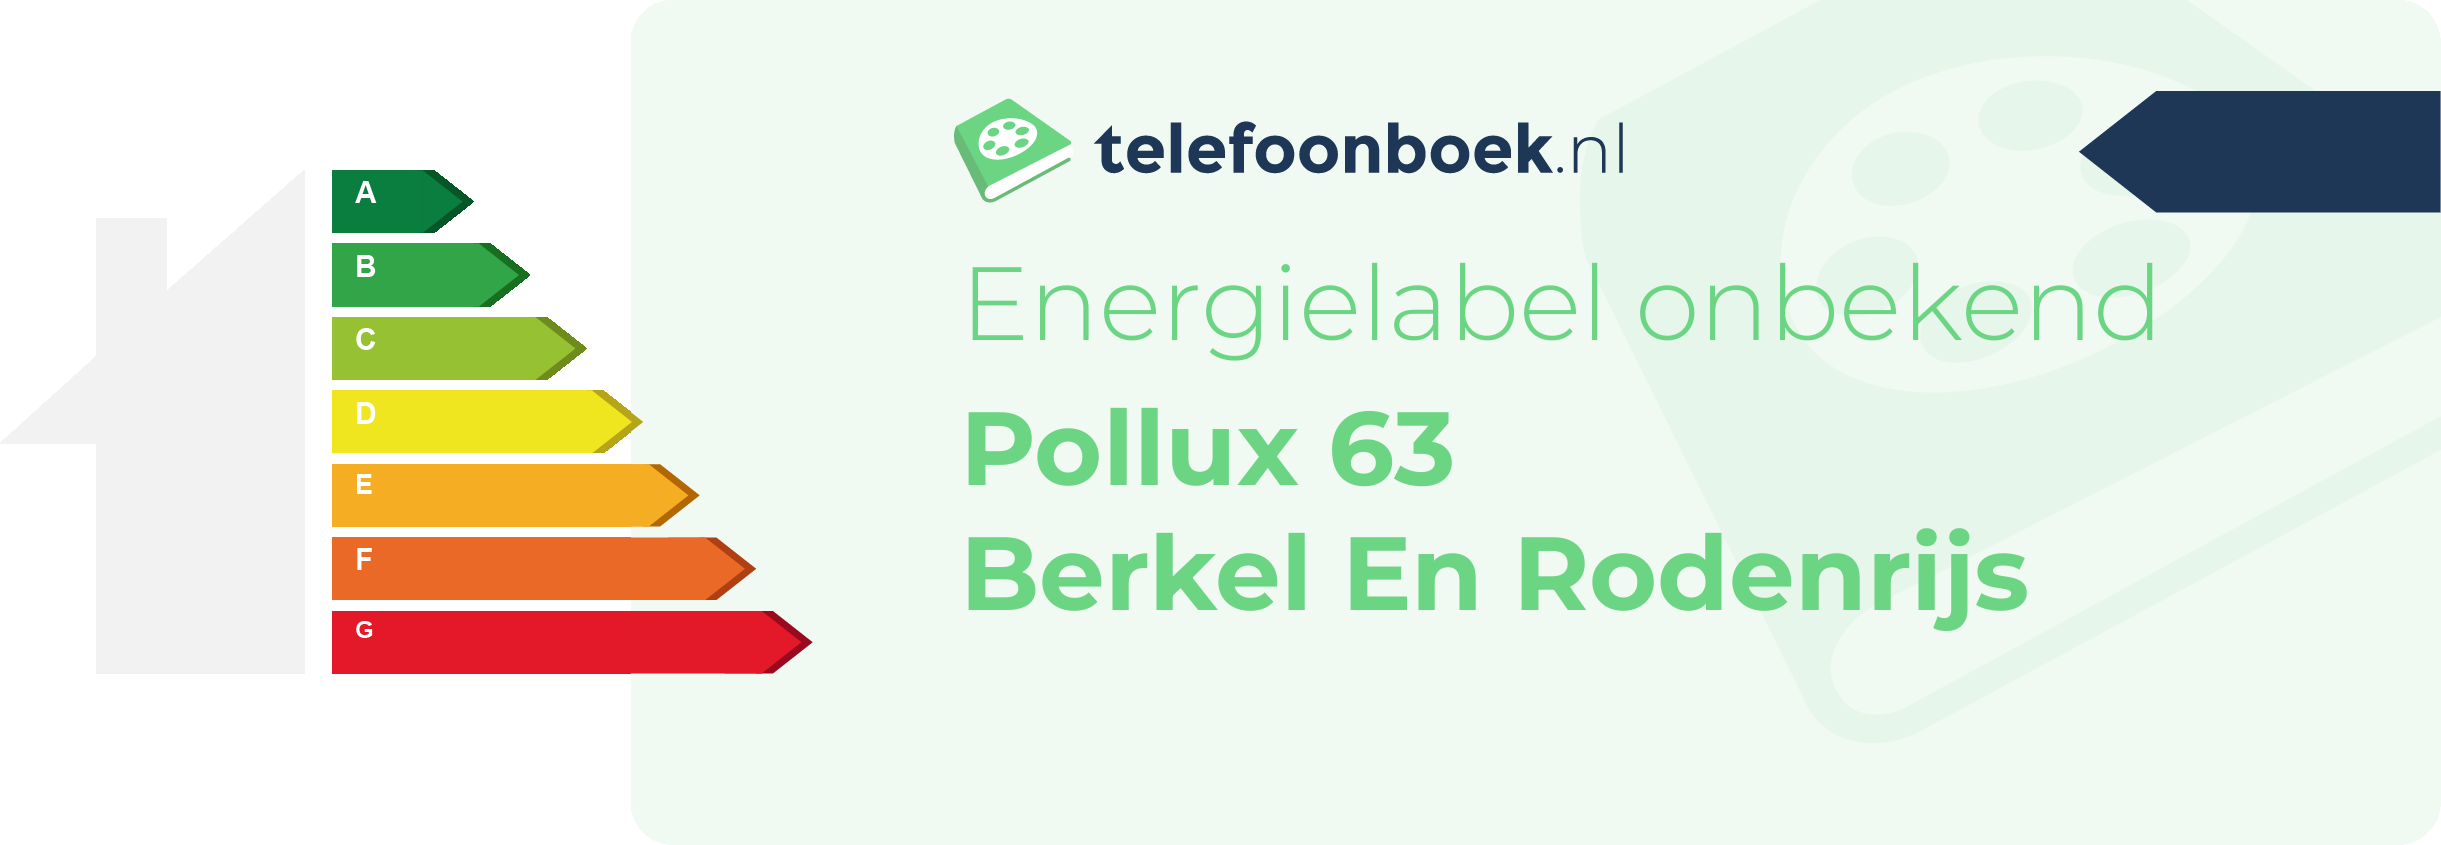 Energielabel Pollux 63 Berkel En Rodenrijs